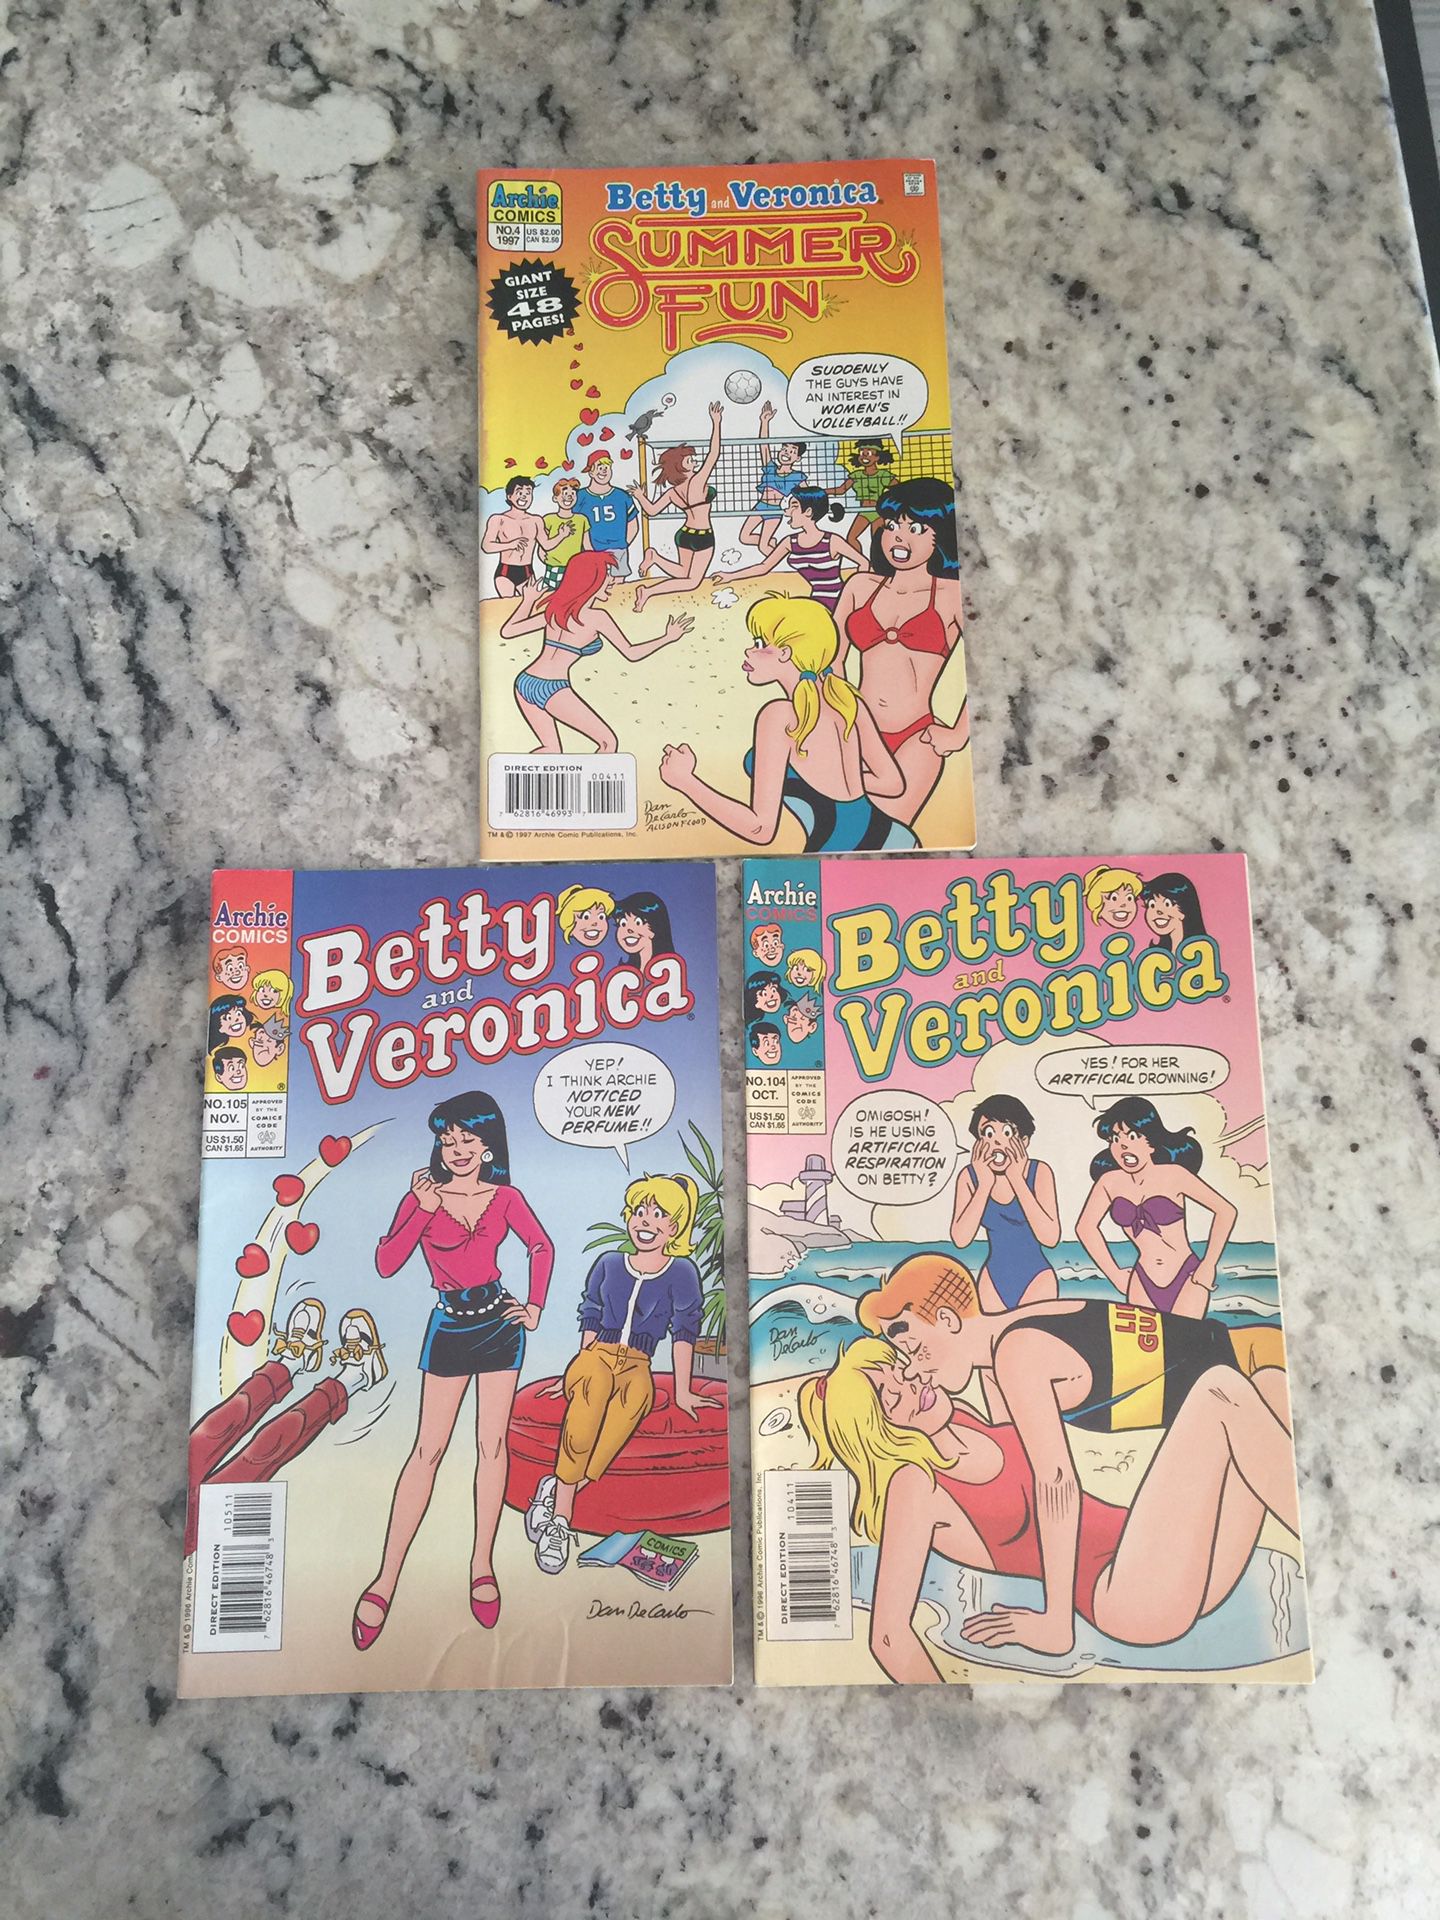 Free Betty & Veronica Archie Comic Books